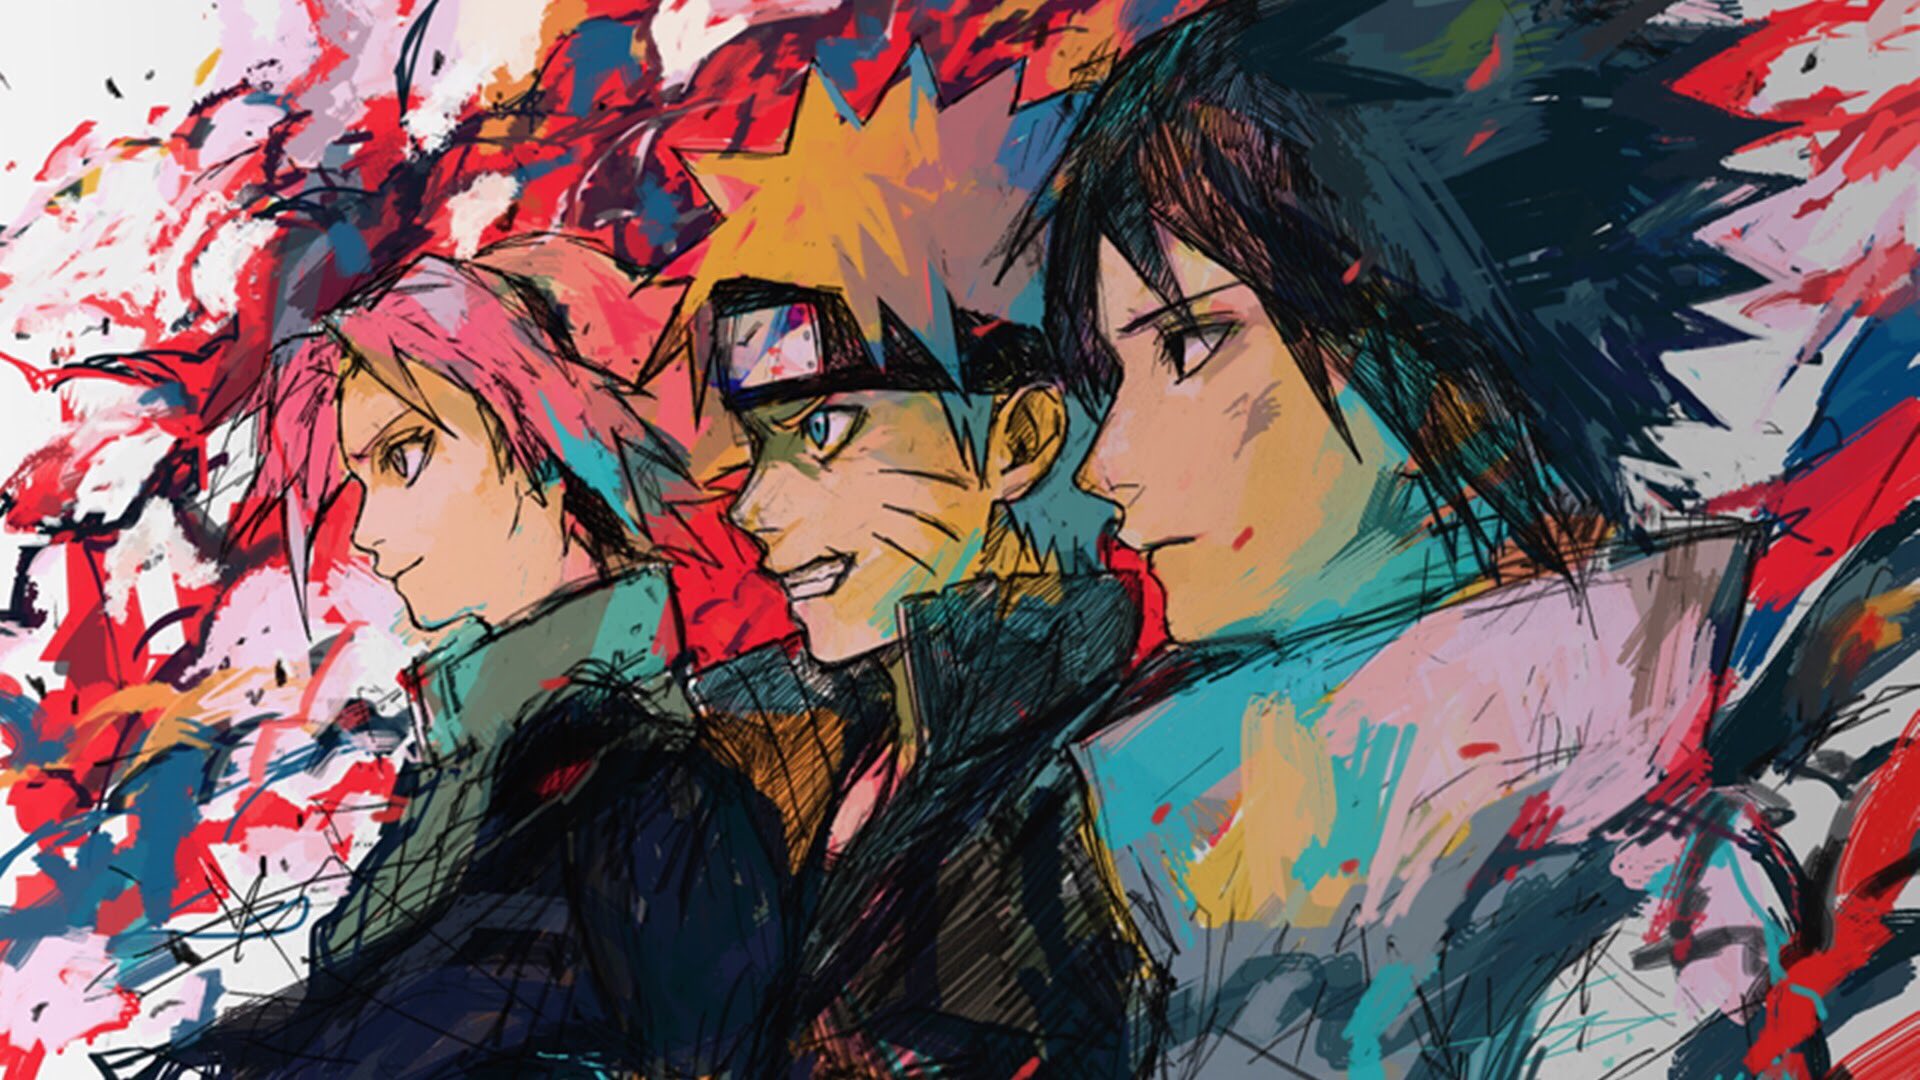 S6 no Twitter: PS4 Wallpaper. Anime Shuffle